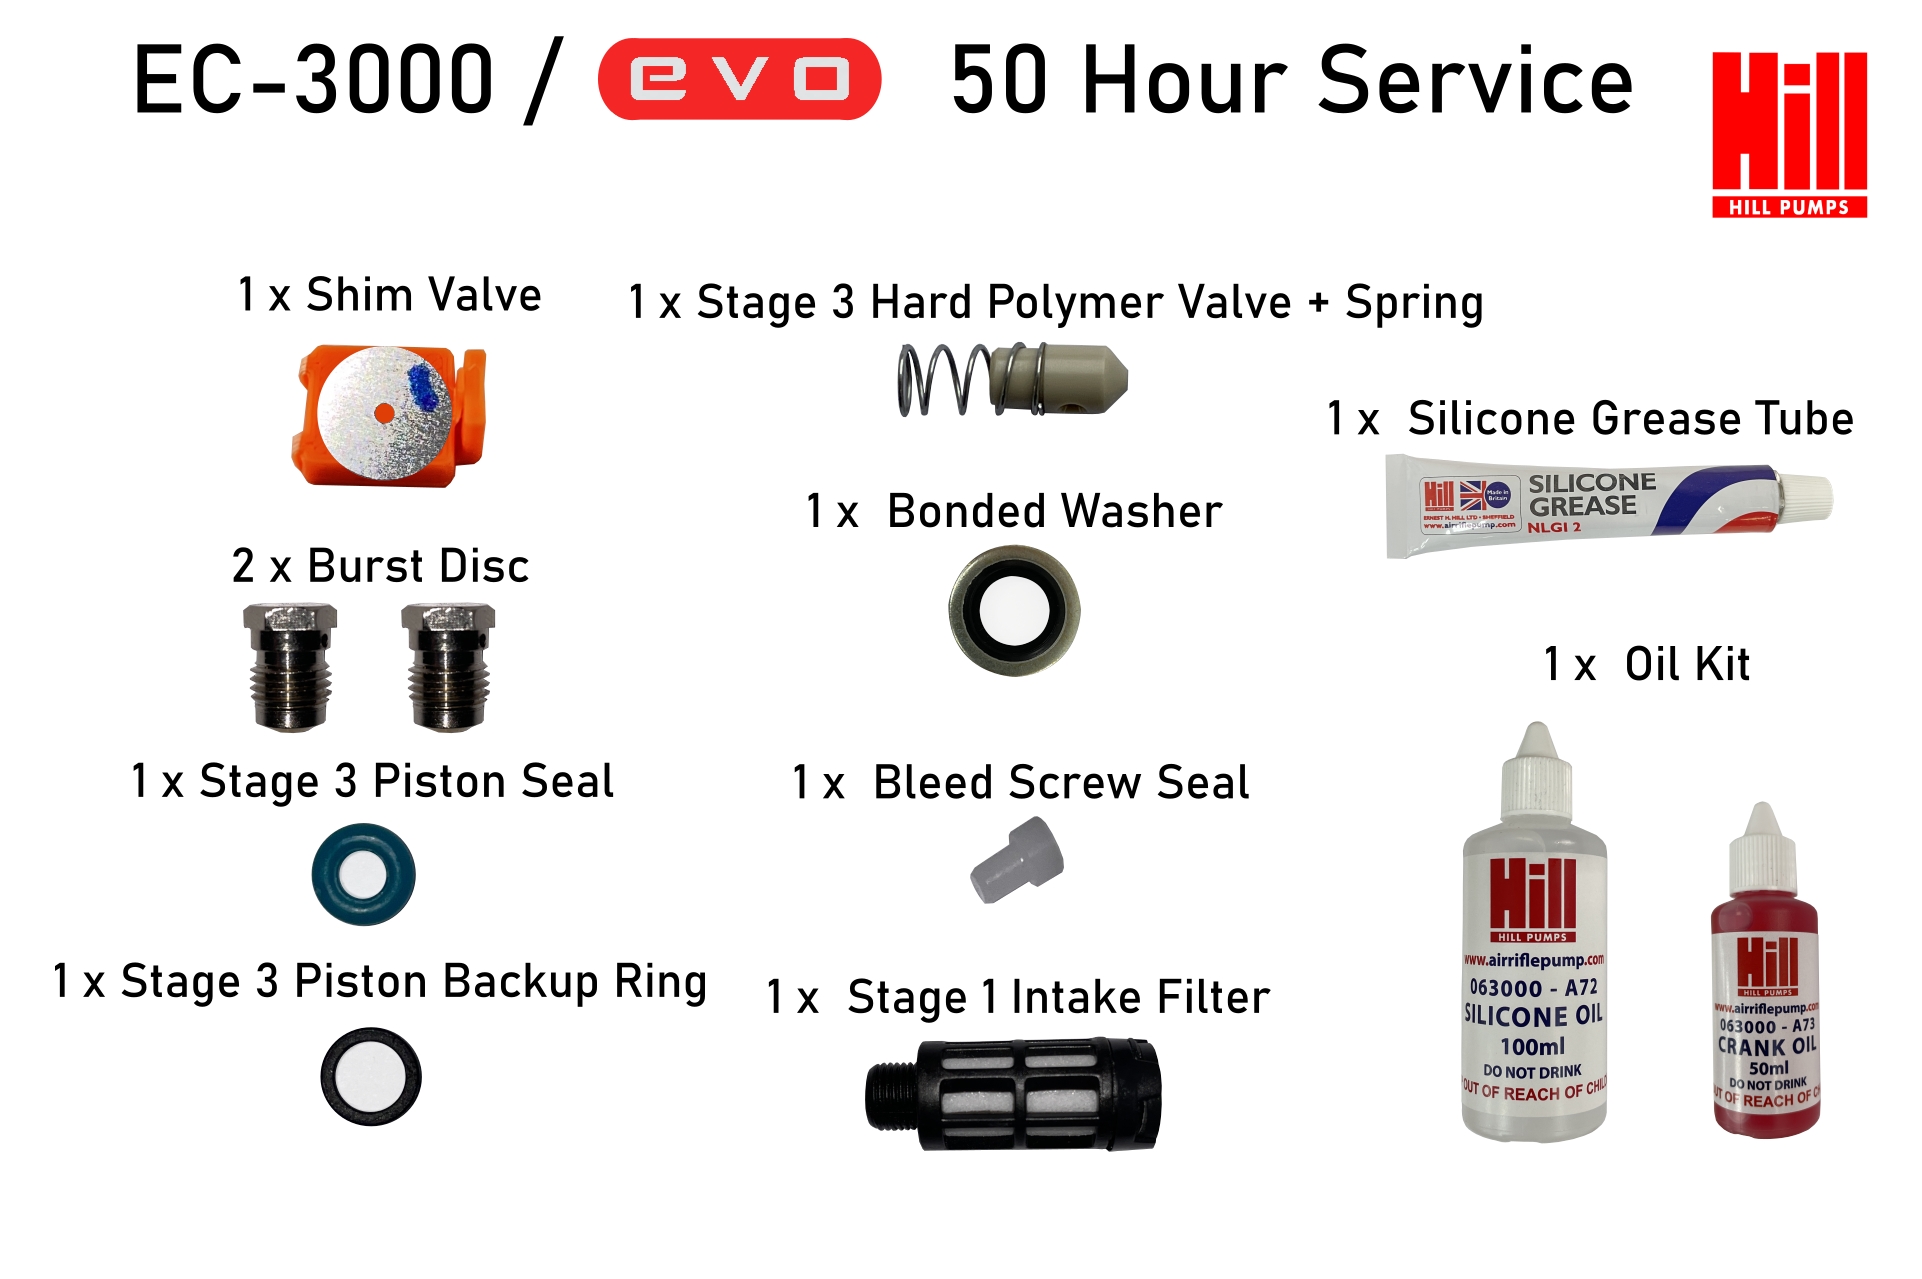 EC-3000 / Evo Service Kits